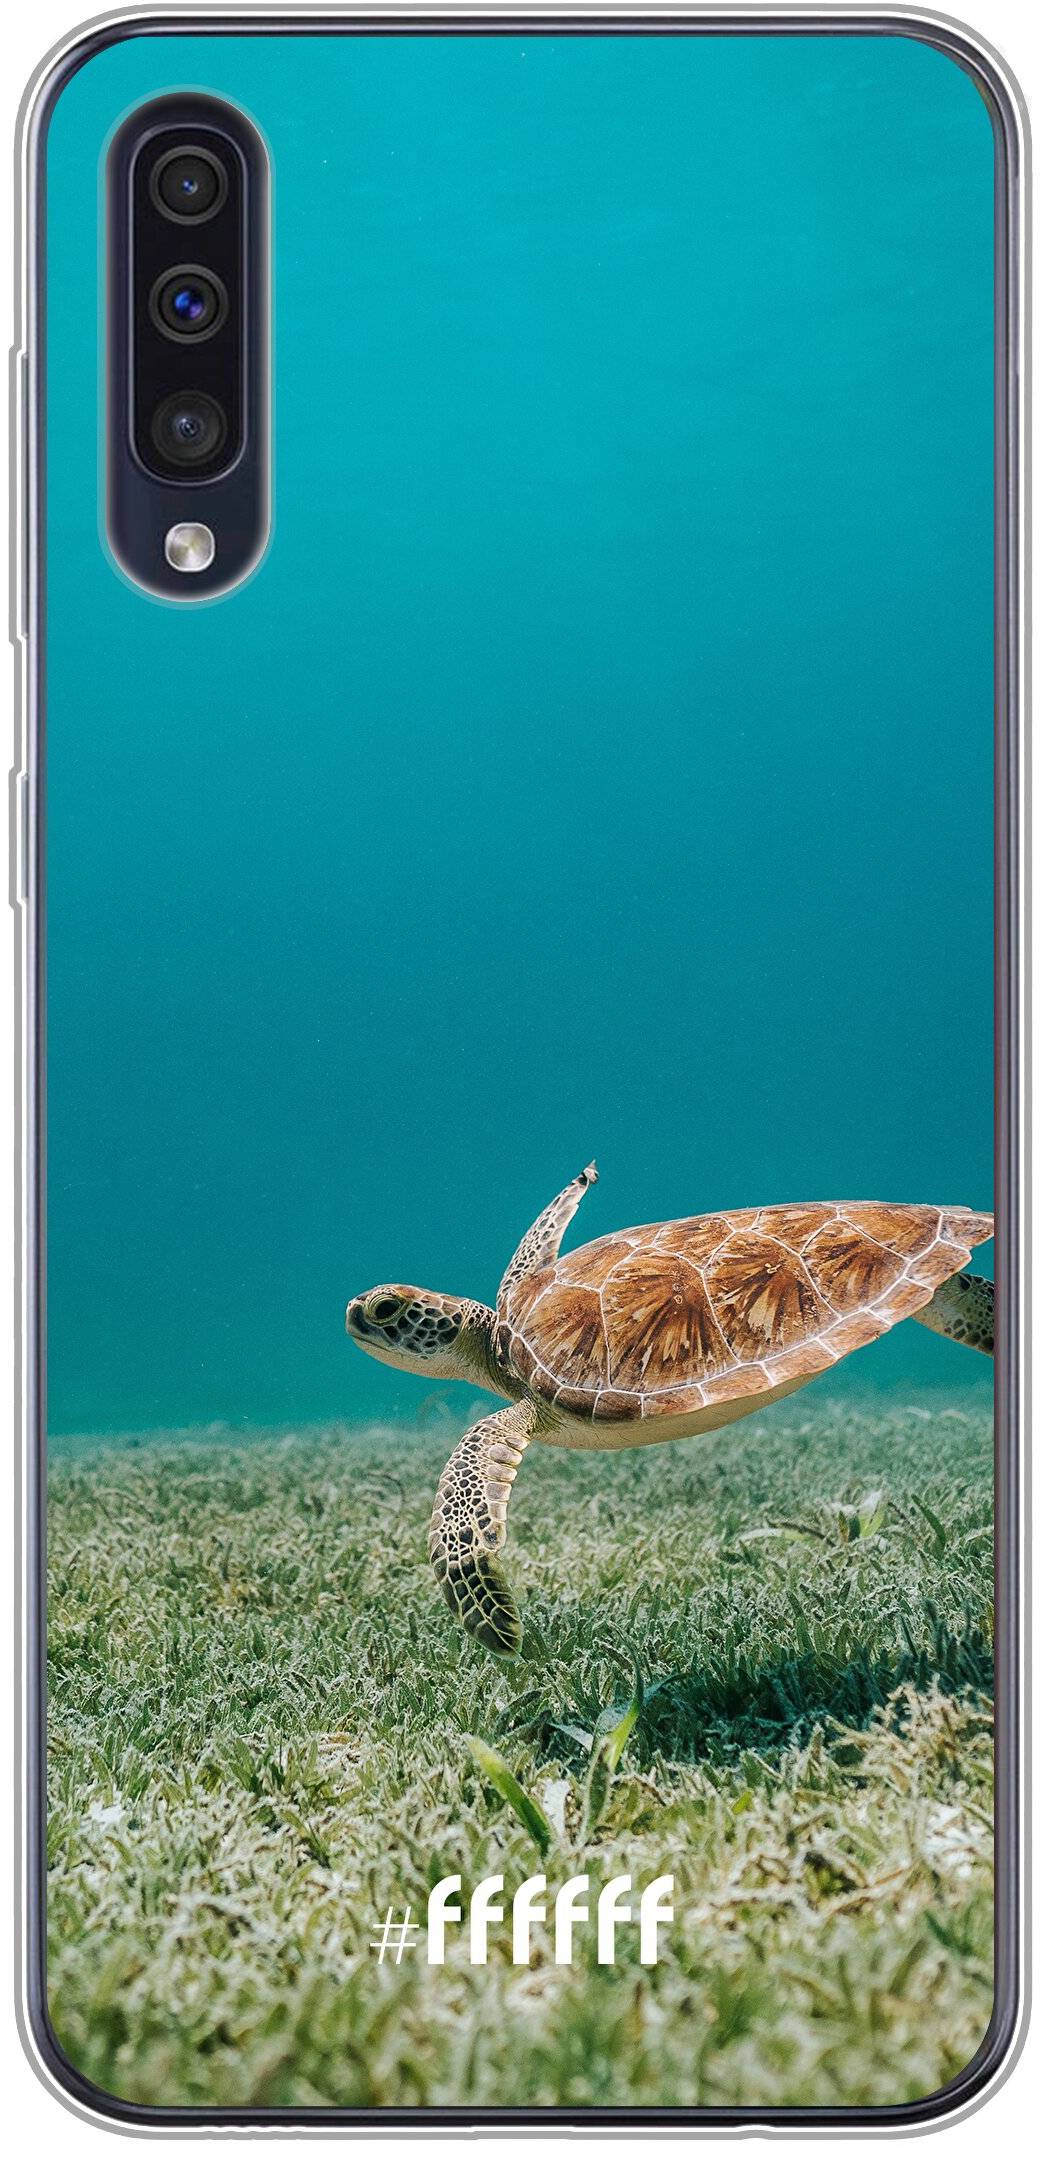 Turtle Galaxy A50s